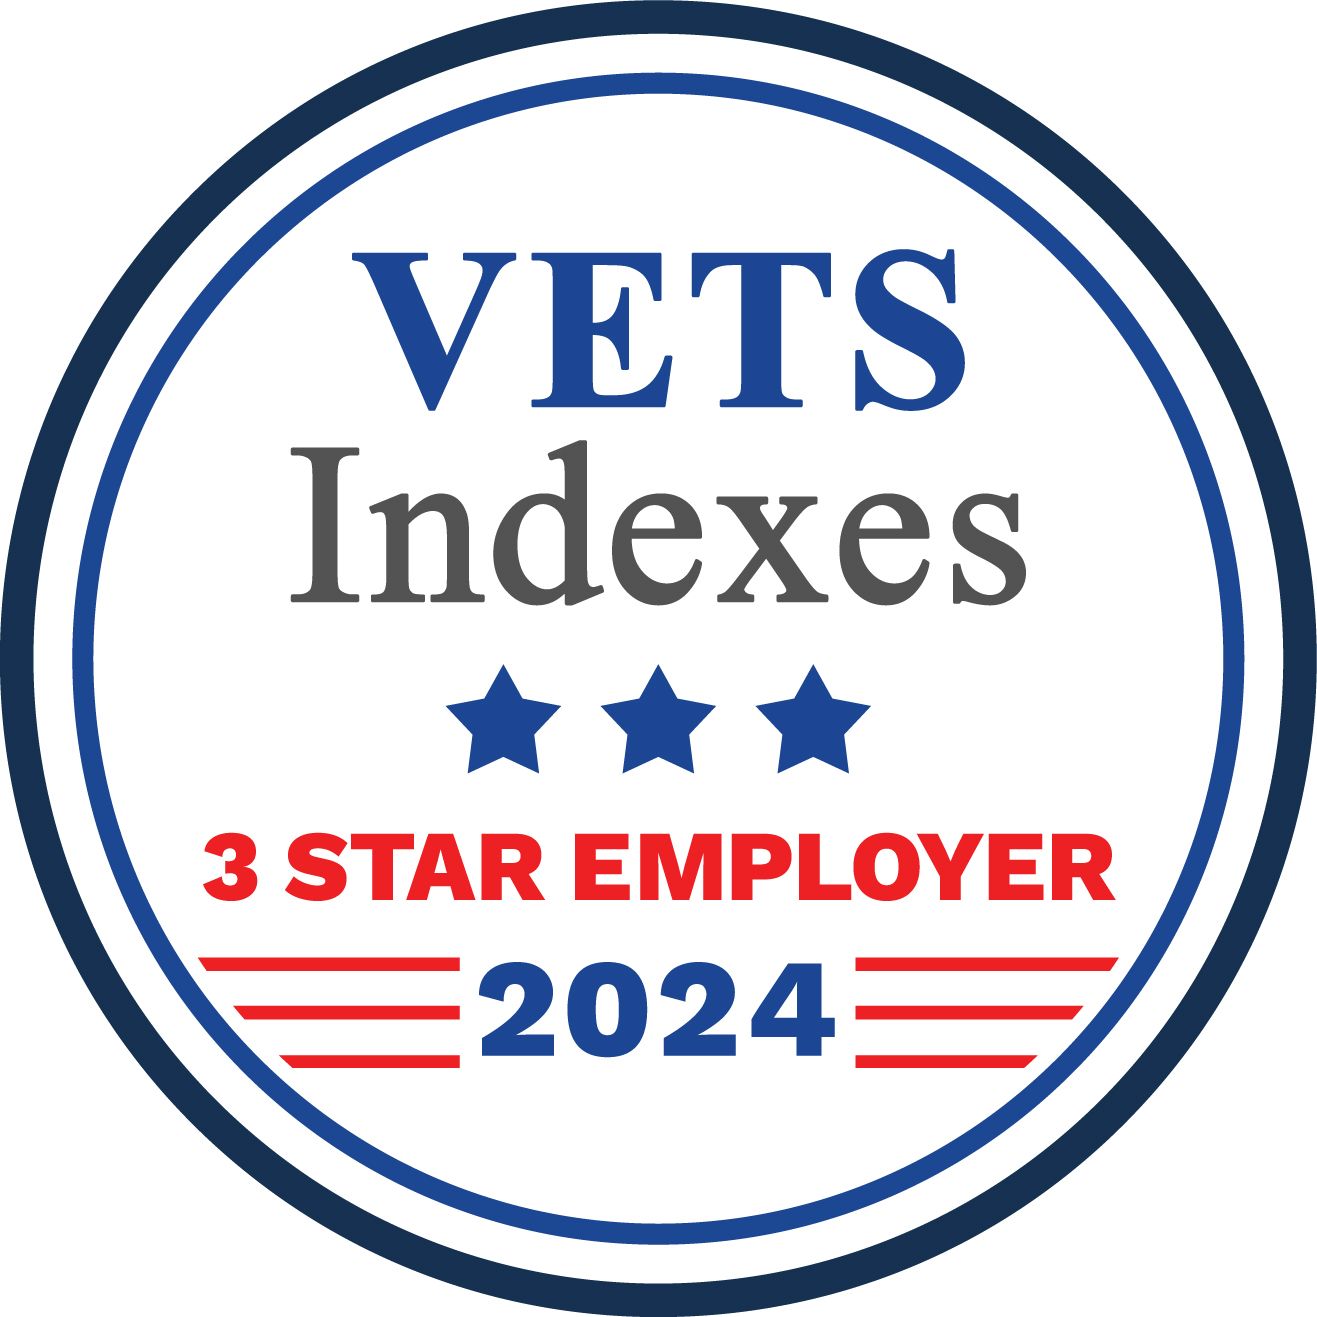 VETS Indexes award logo